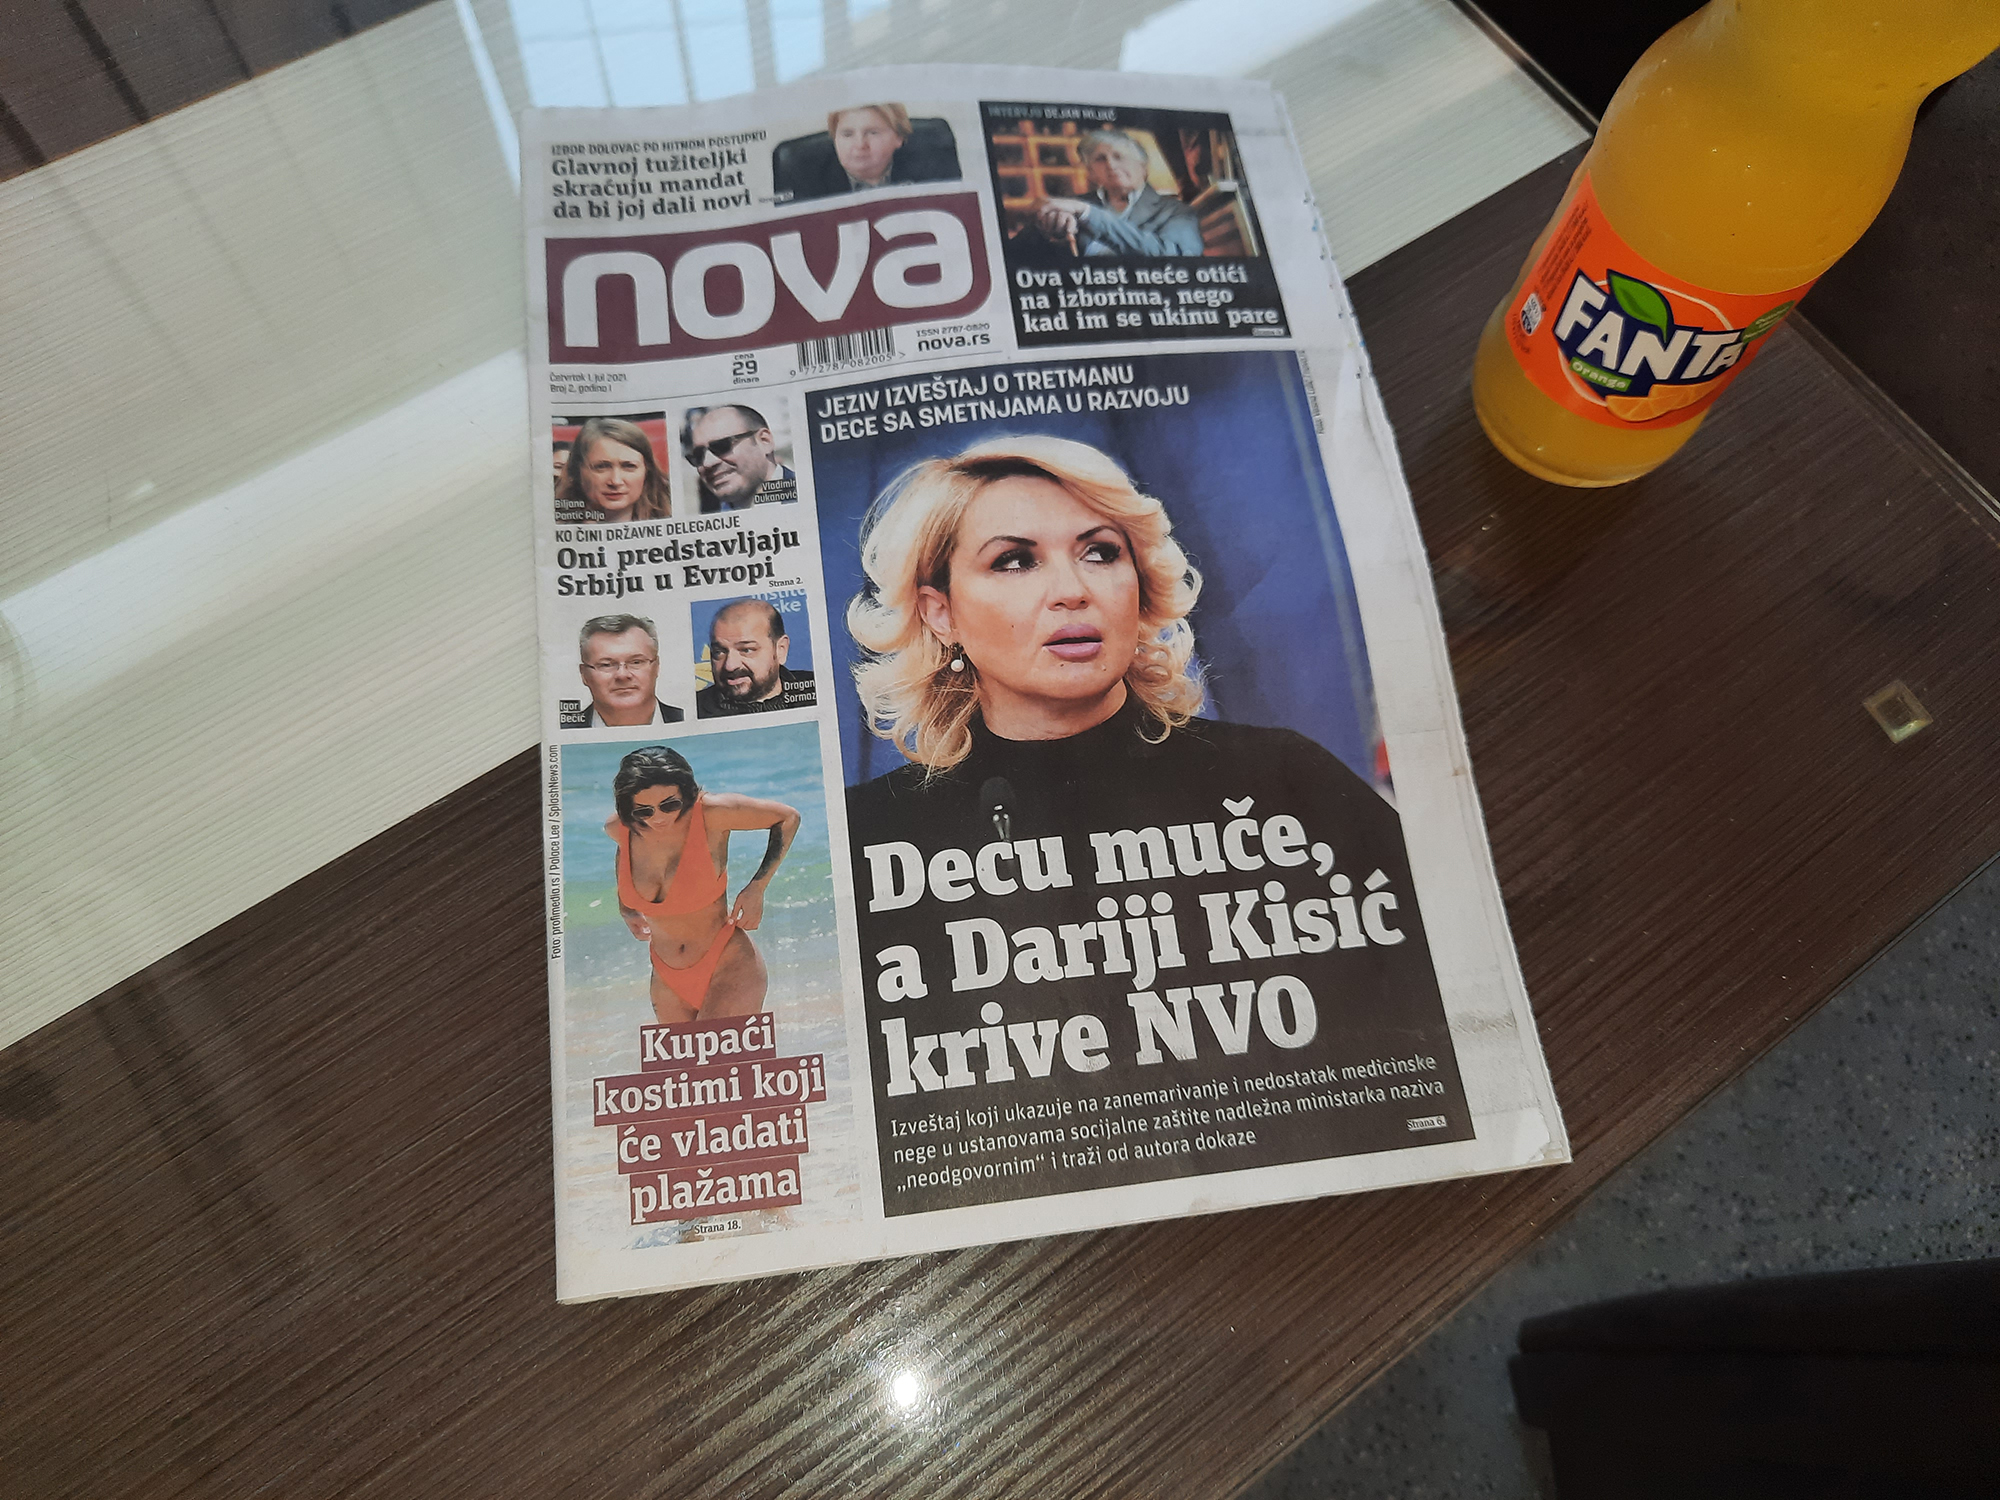 Cacak karavan podela novina Nova